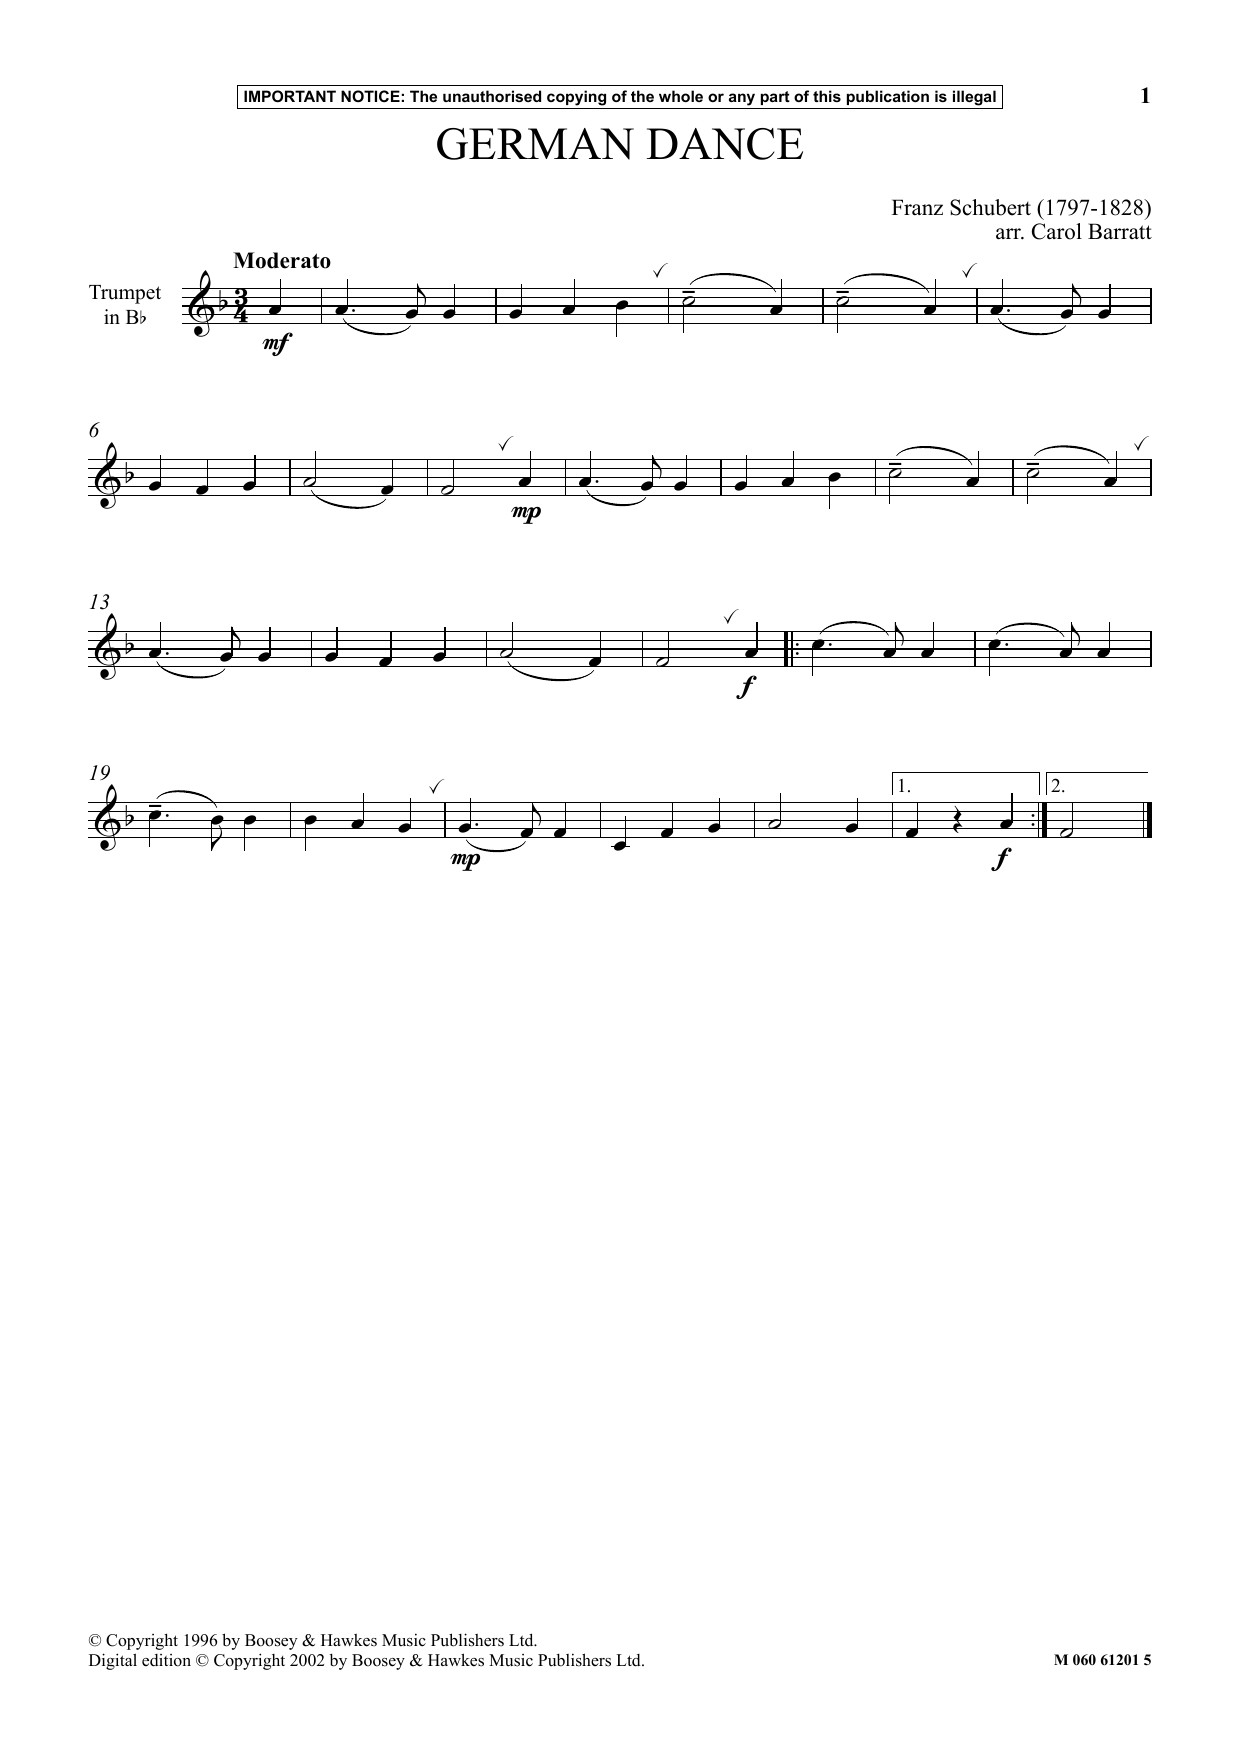 Franz Schubert German Dance Sheet Music Notes & Chords for Instrumental Solo - Download or Print PDF